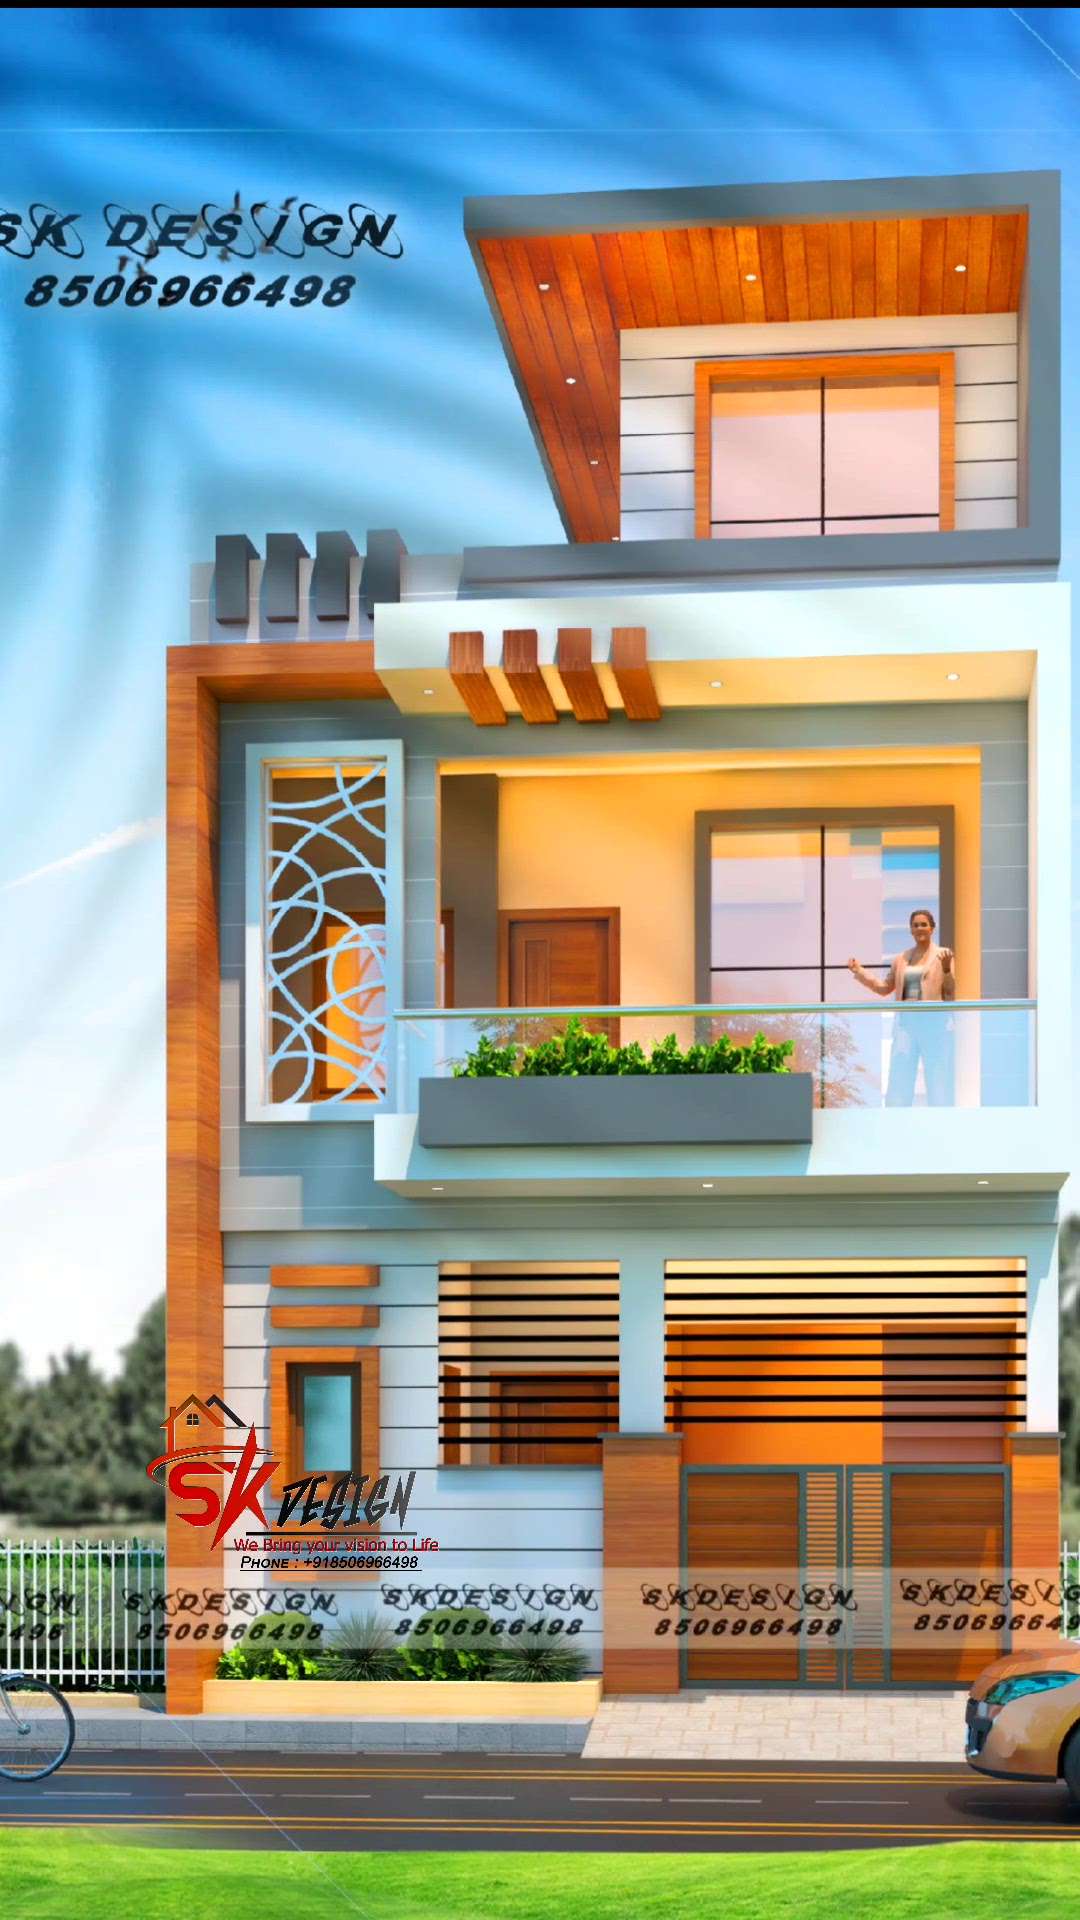 #HouseDesigns #HouseConstruction #Architect #frontElevation #realistic #HomeDecor #skdesign666 #kolopost #koloviral